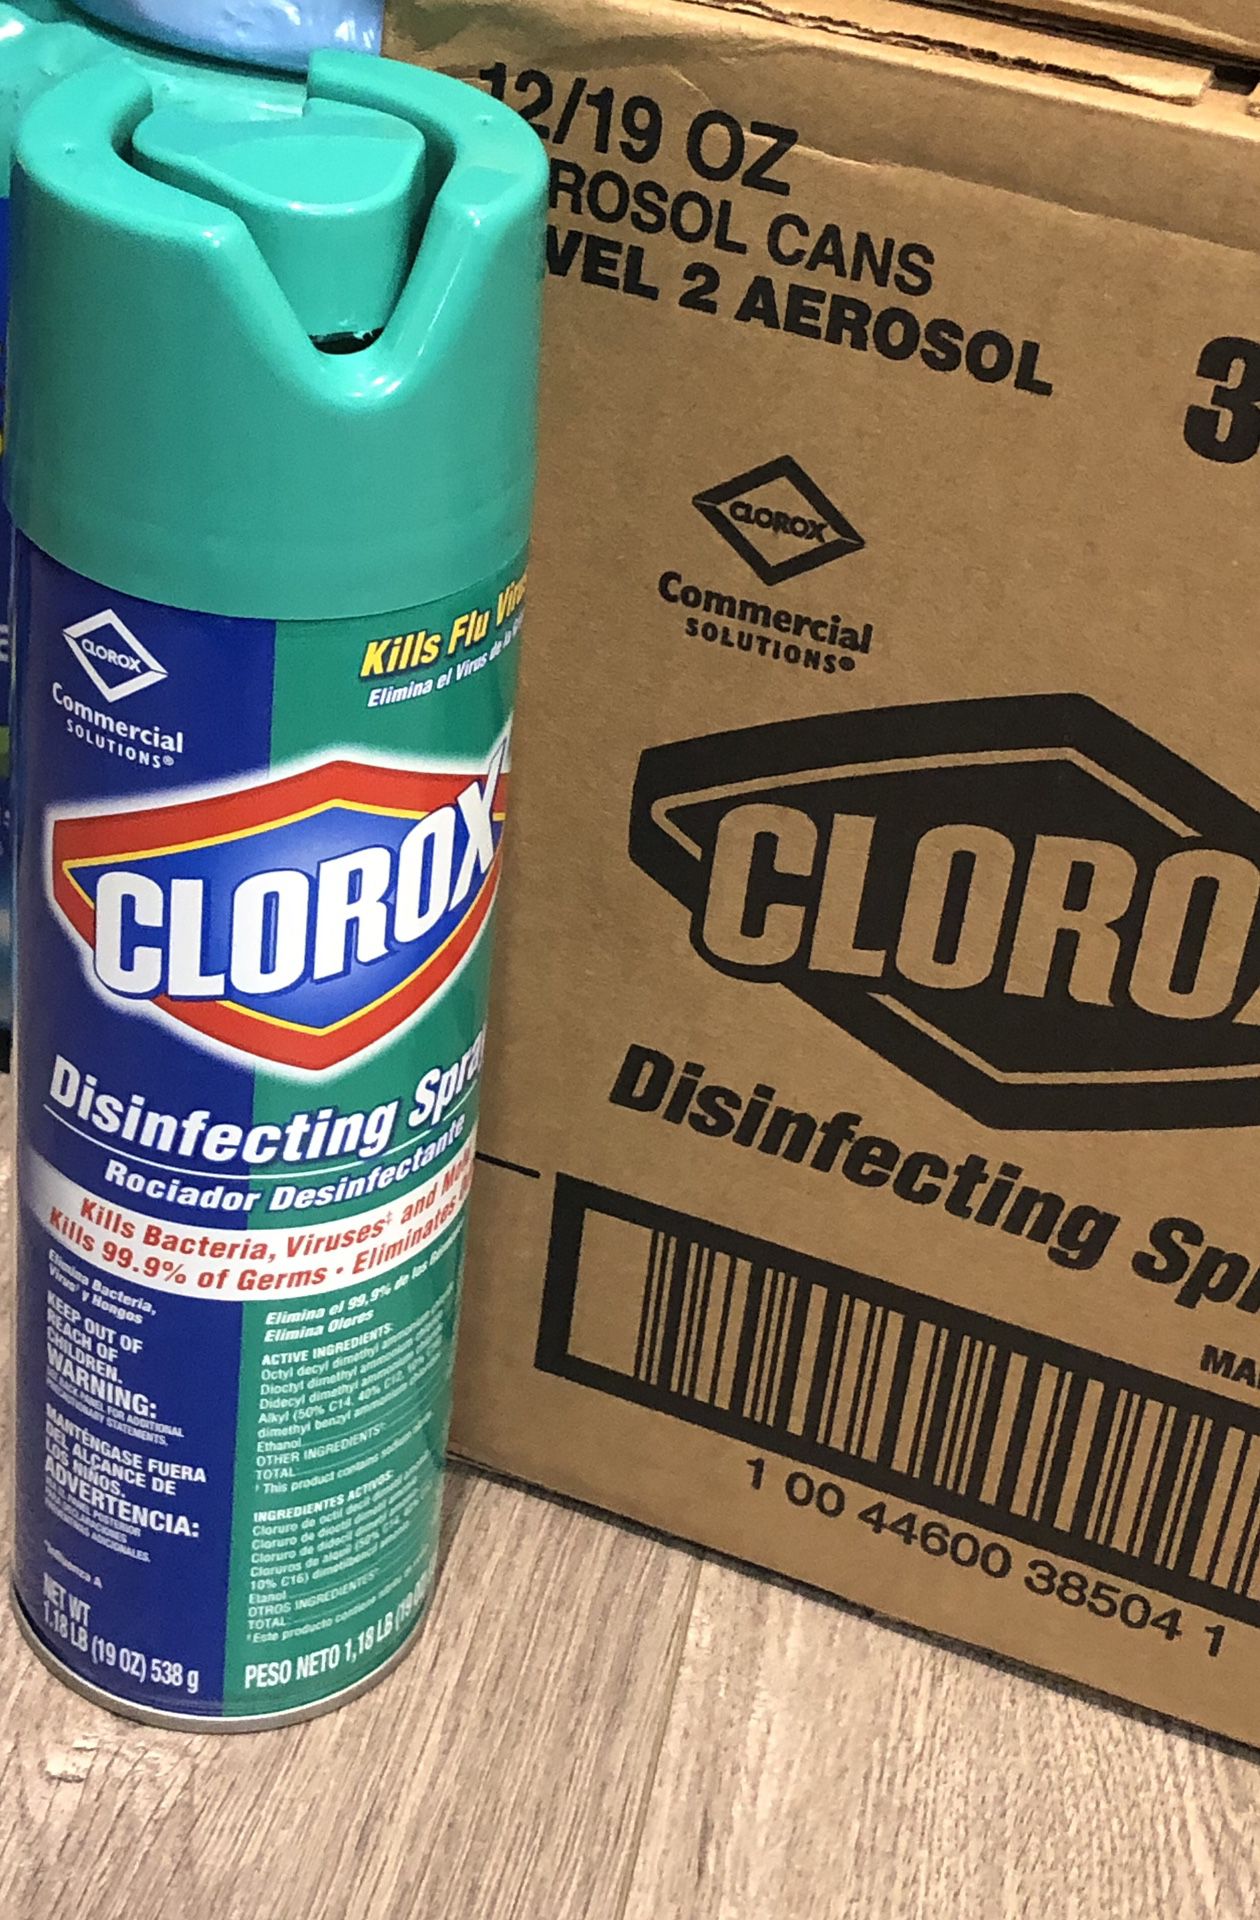 Clorox disinfectant spray